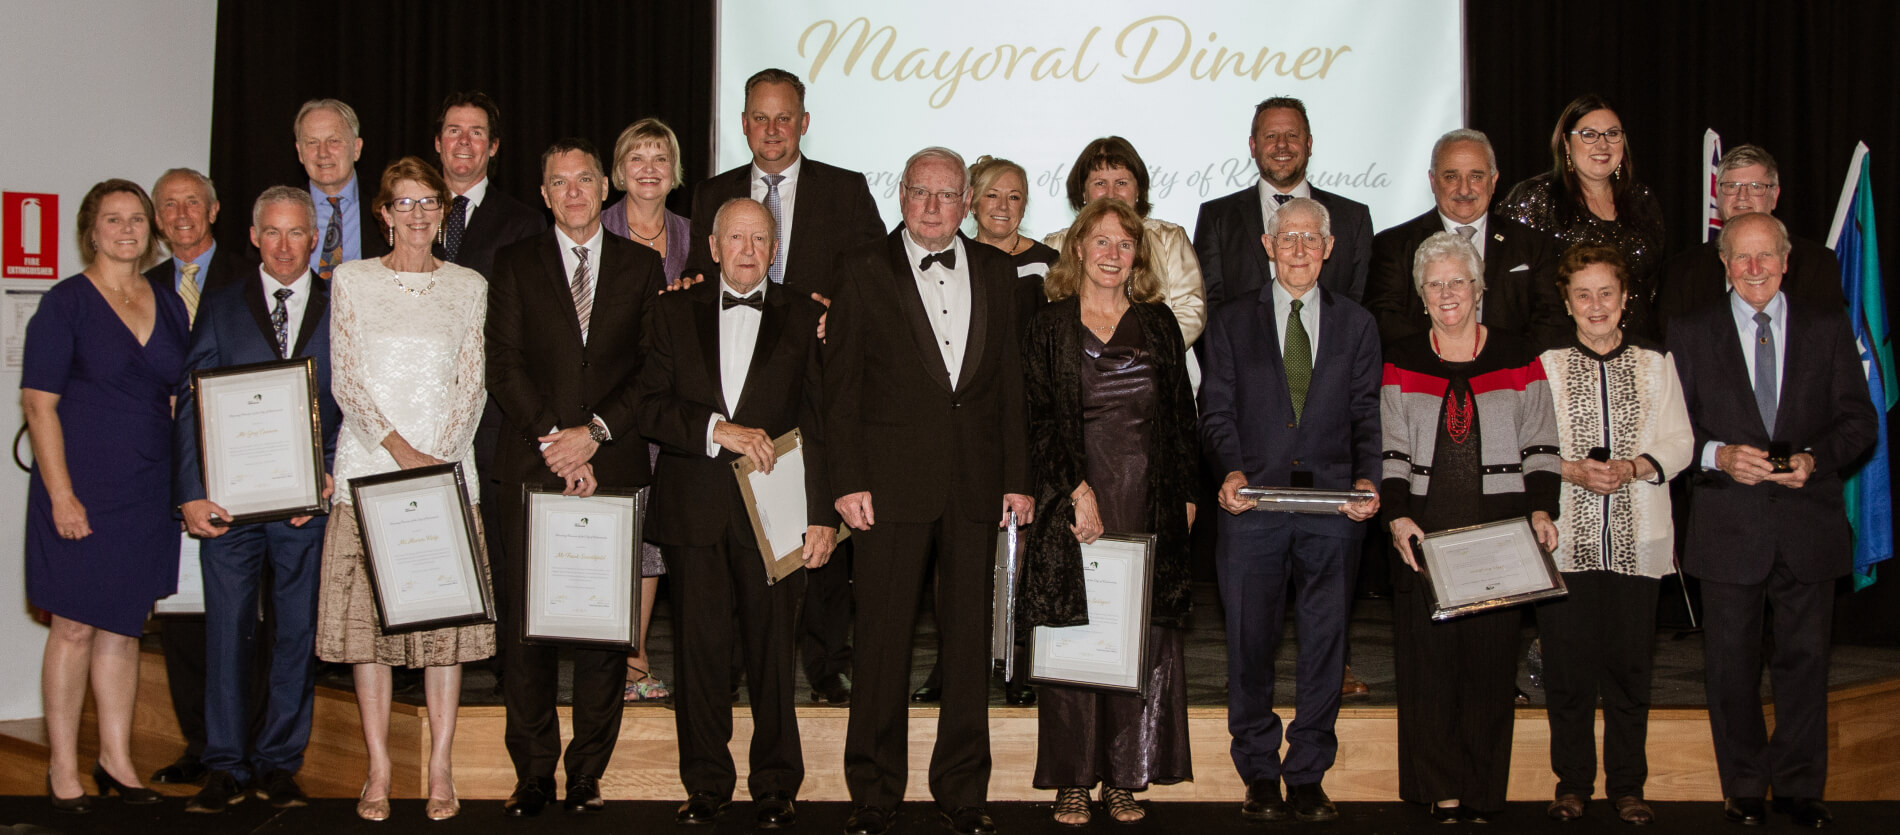 Freemans Awards - Mayor Dinner 2019